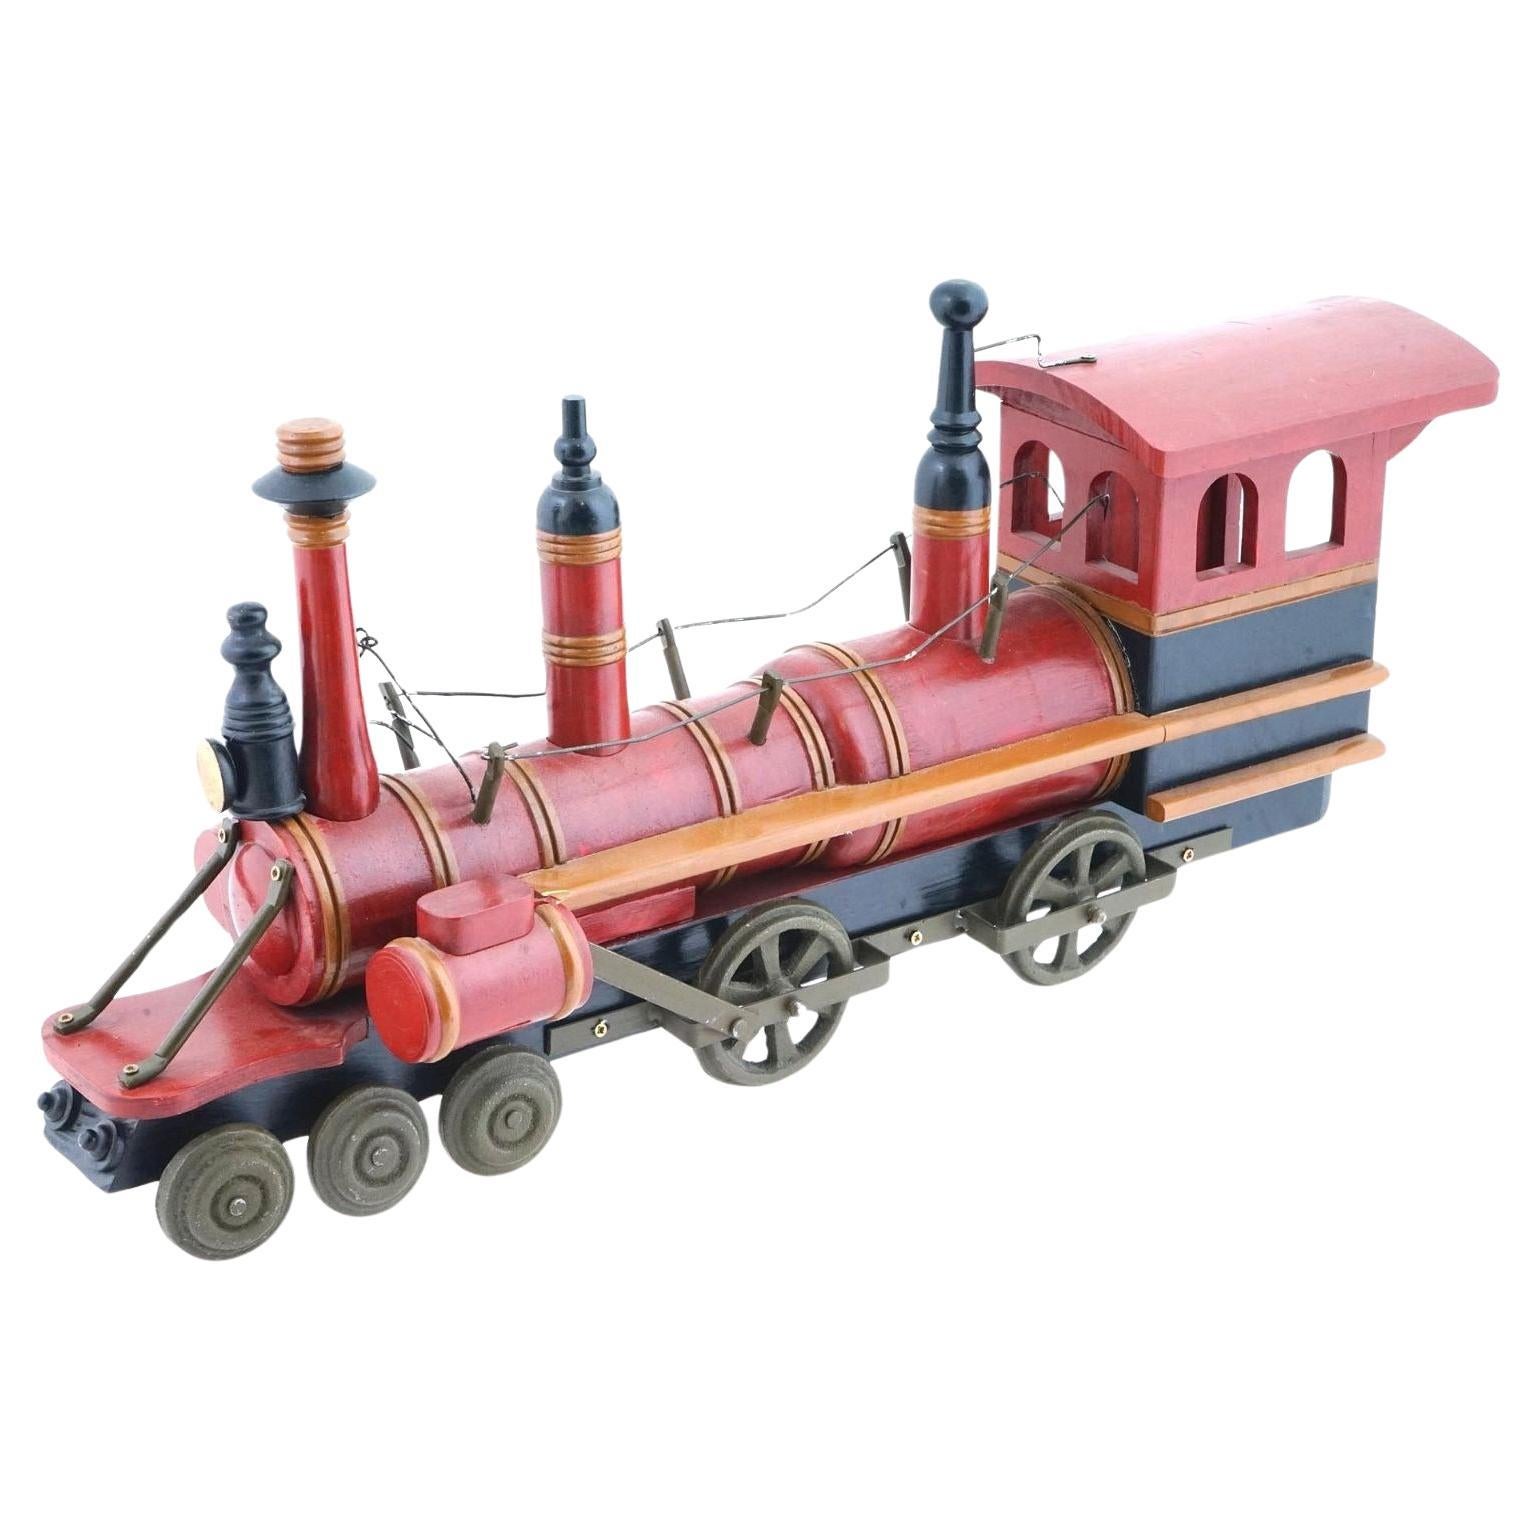 Vintage Steam Locomotive Toy For Sale